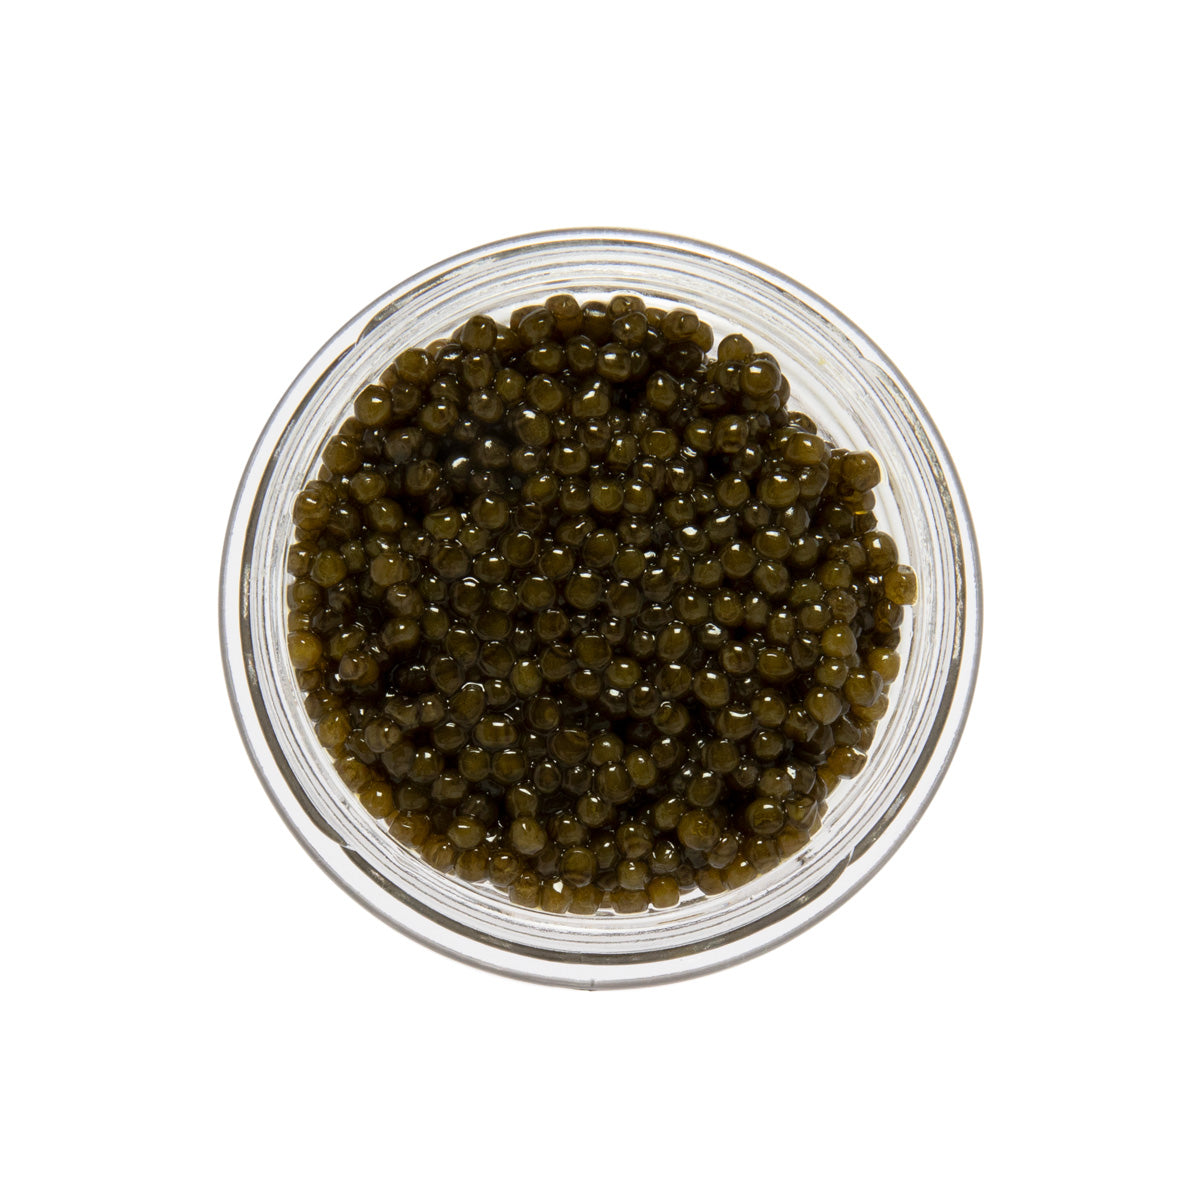 Caviar Star Polish Osetra Sturgeon Caviar